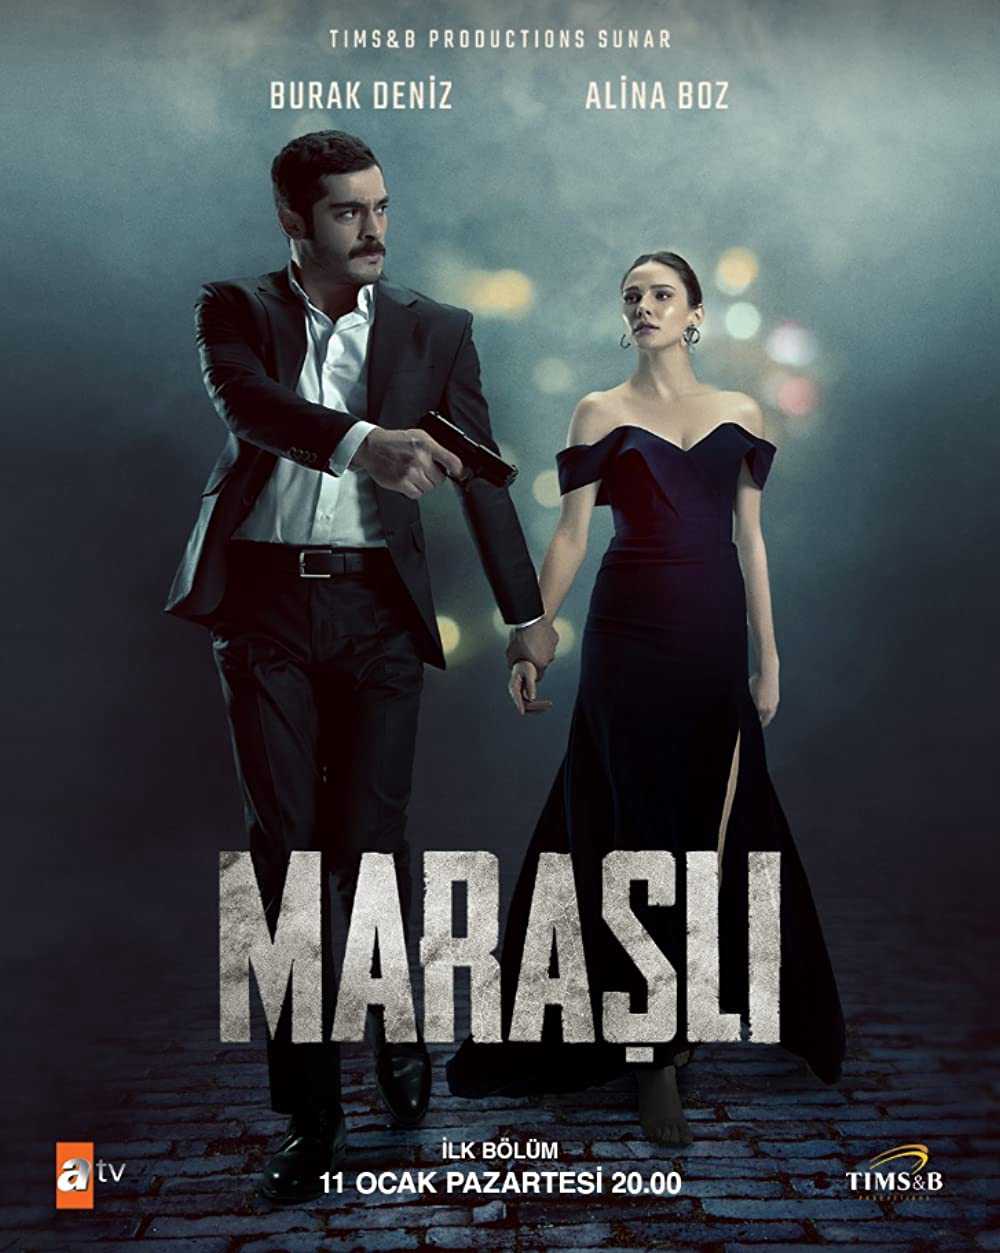 Marasli - The trusted